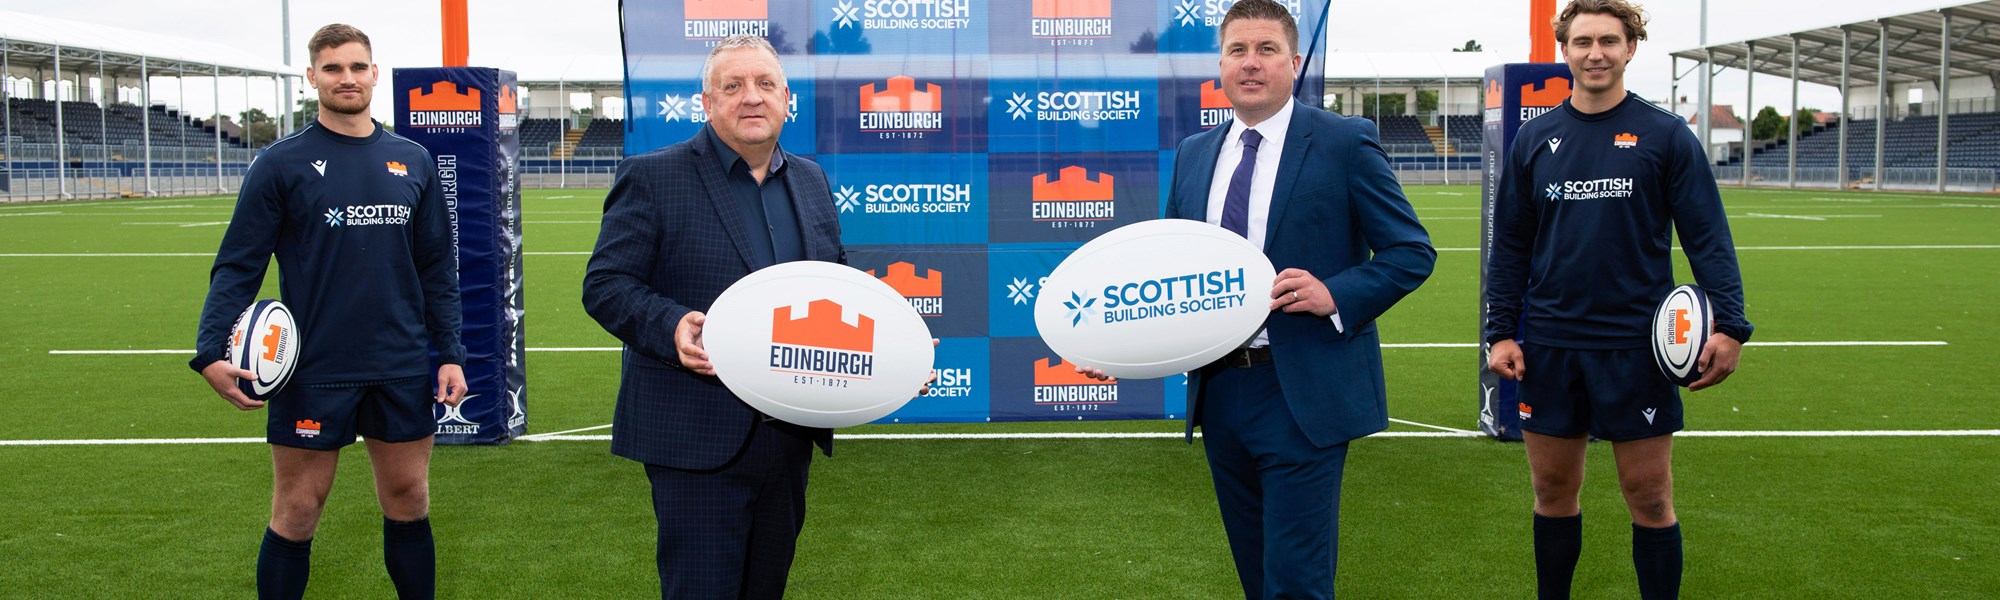 Background image: We're backing Edinburgh Rugby